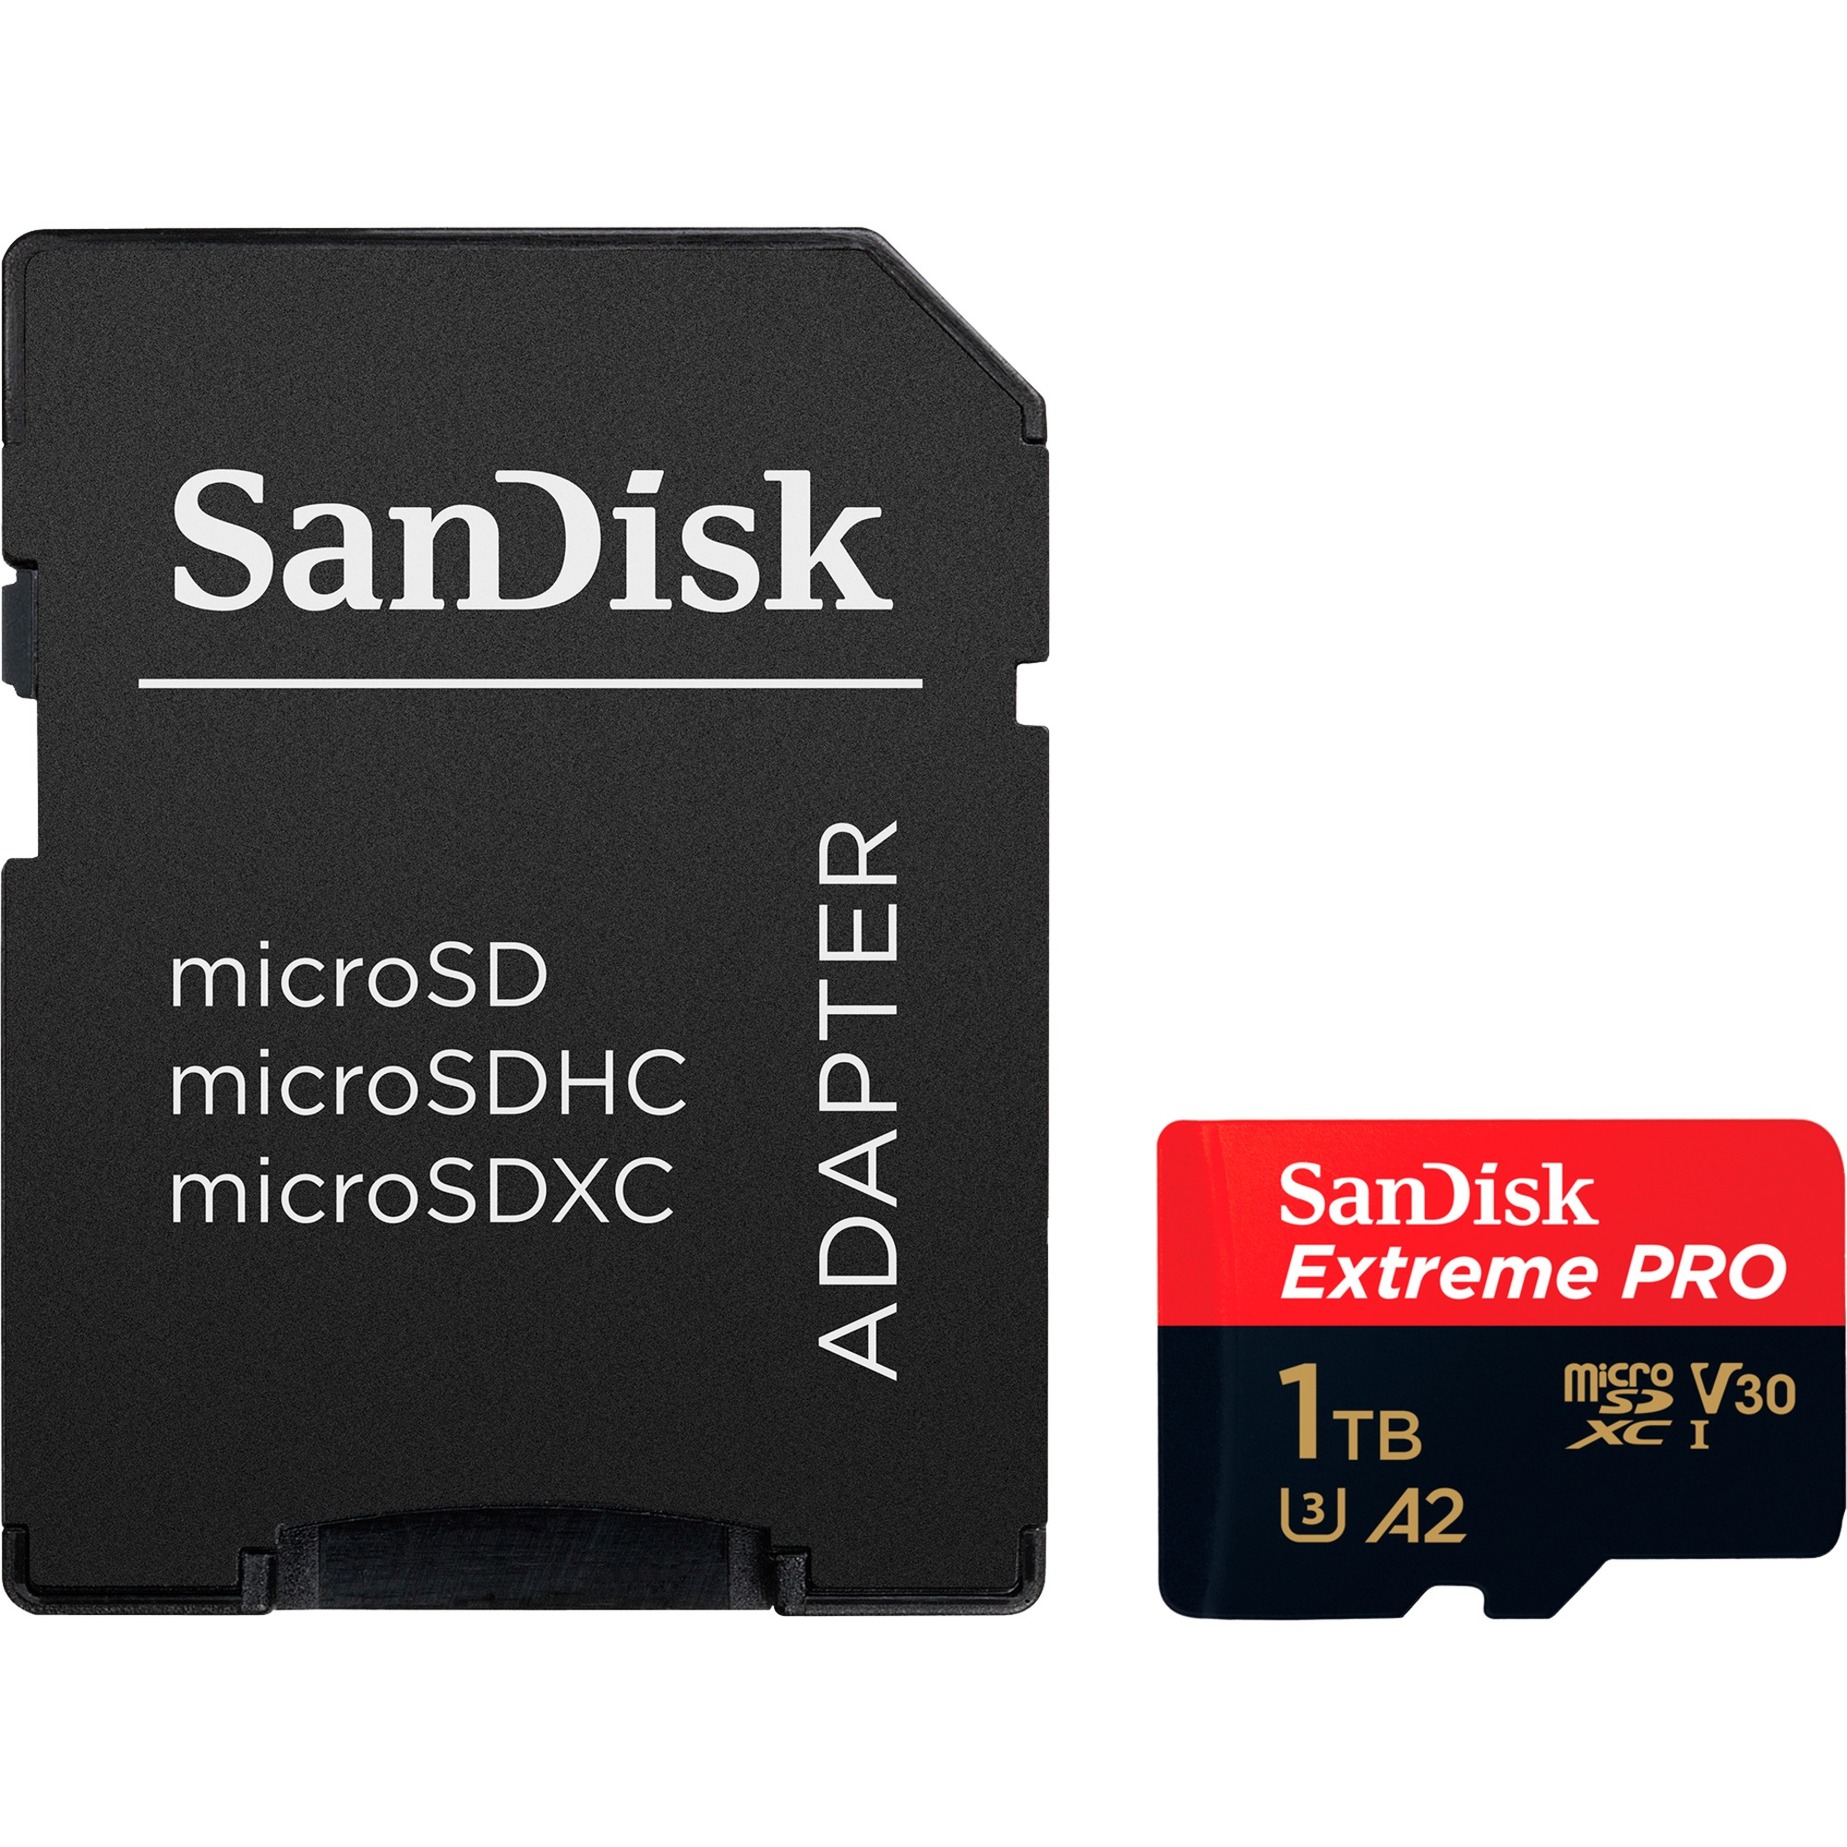 Image of Alternate - Extreme PRO 1 TB microSDXC, Speicherkarte online einkaufen bei Alternate